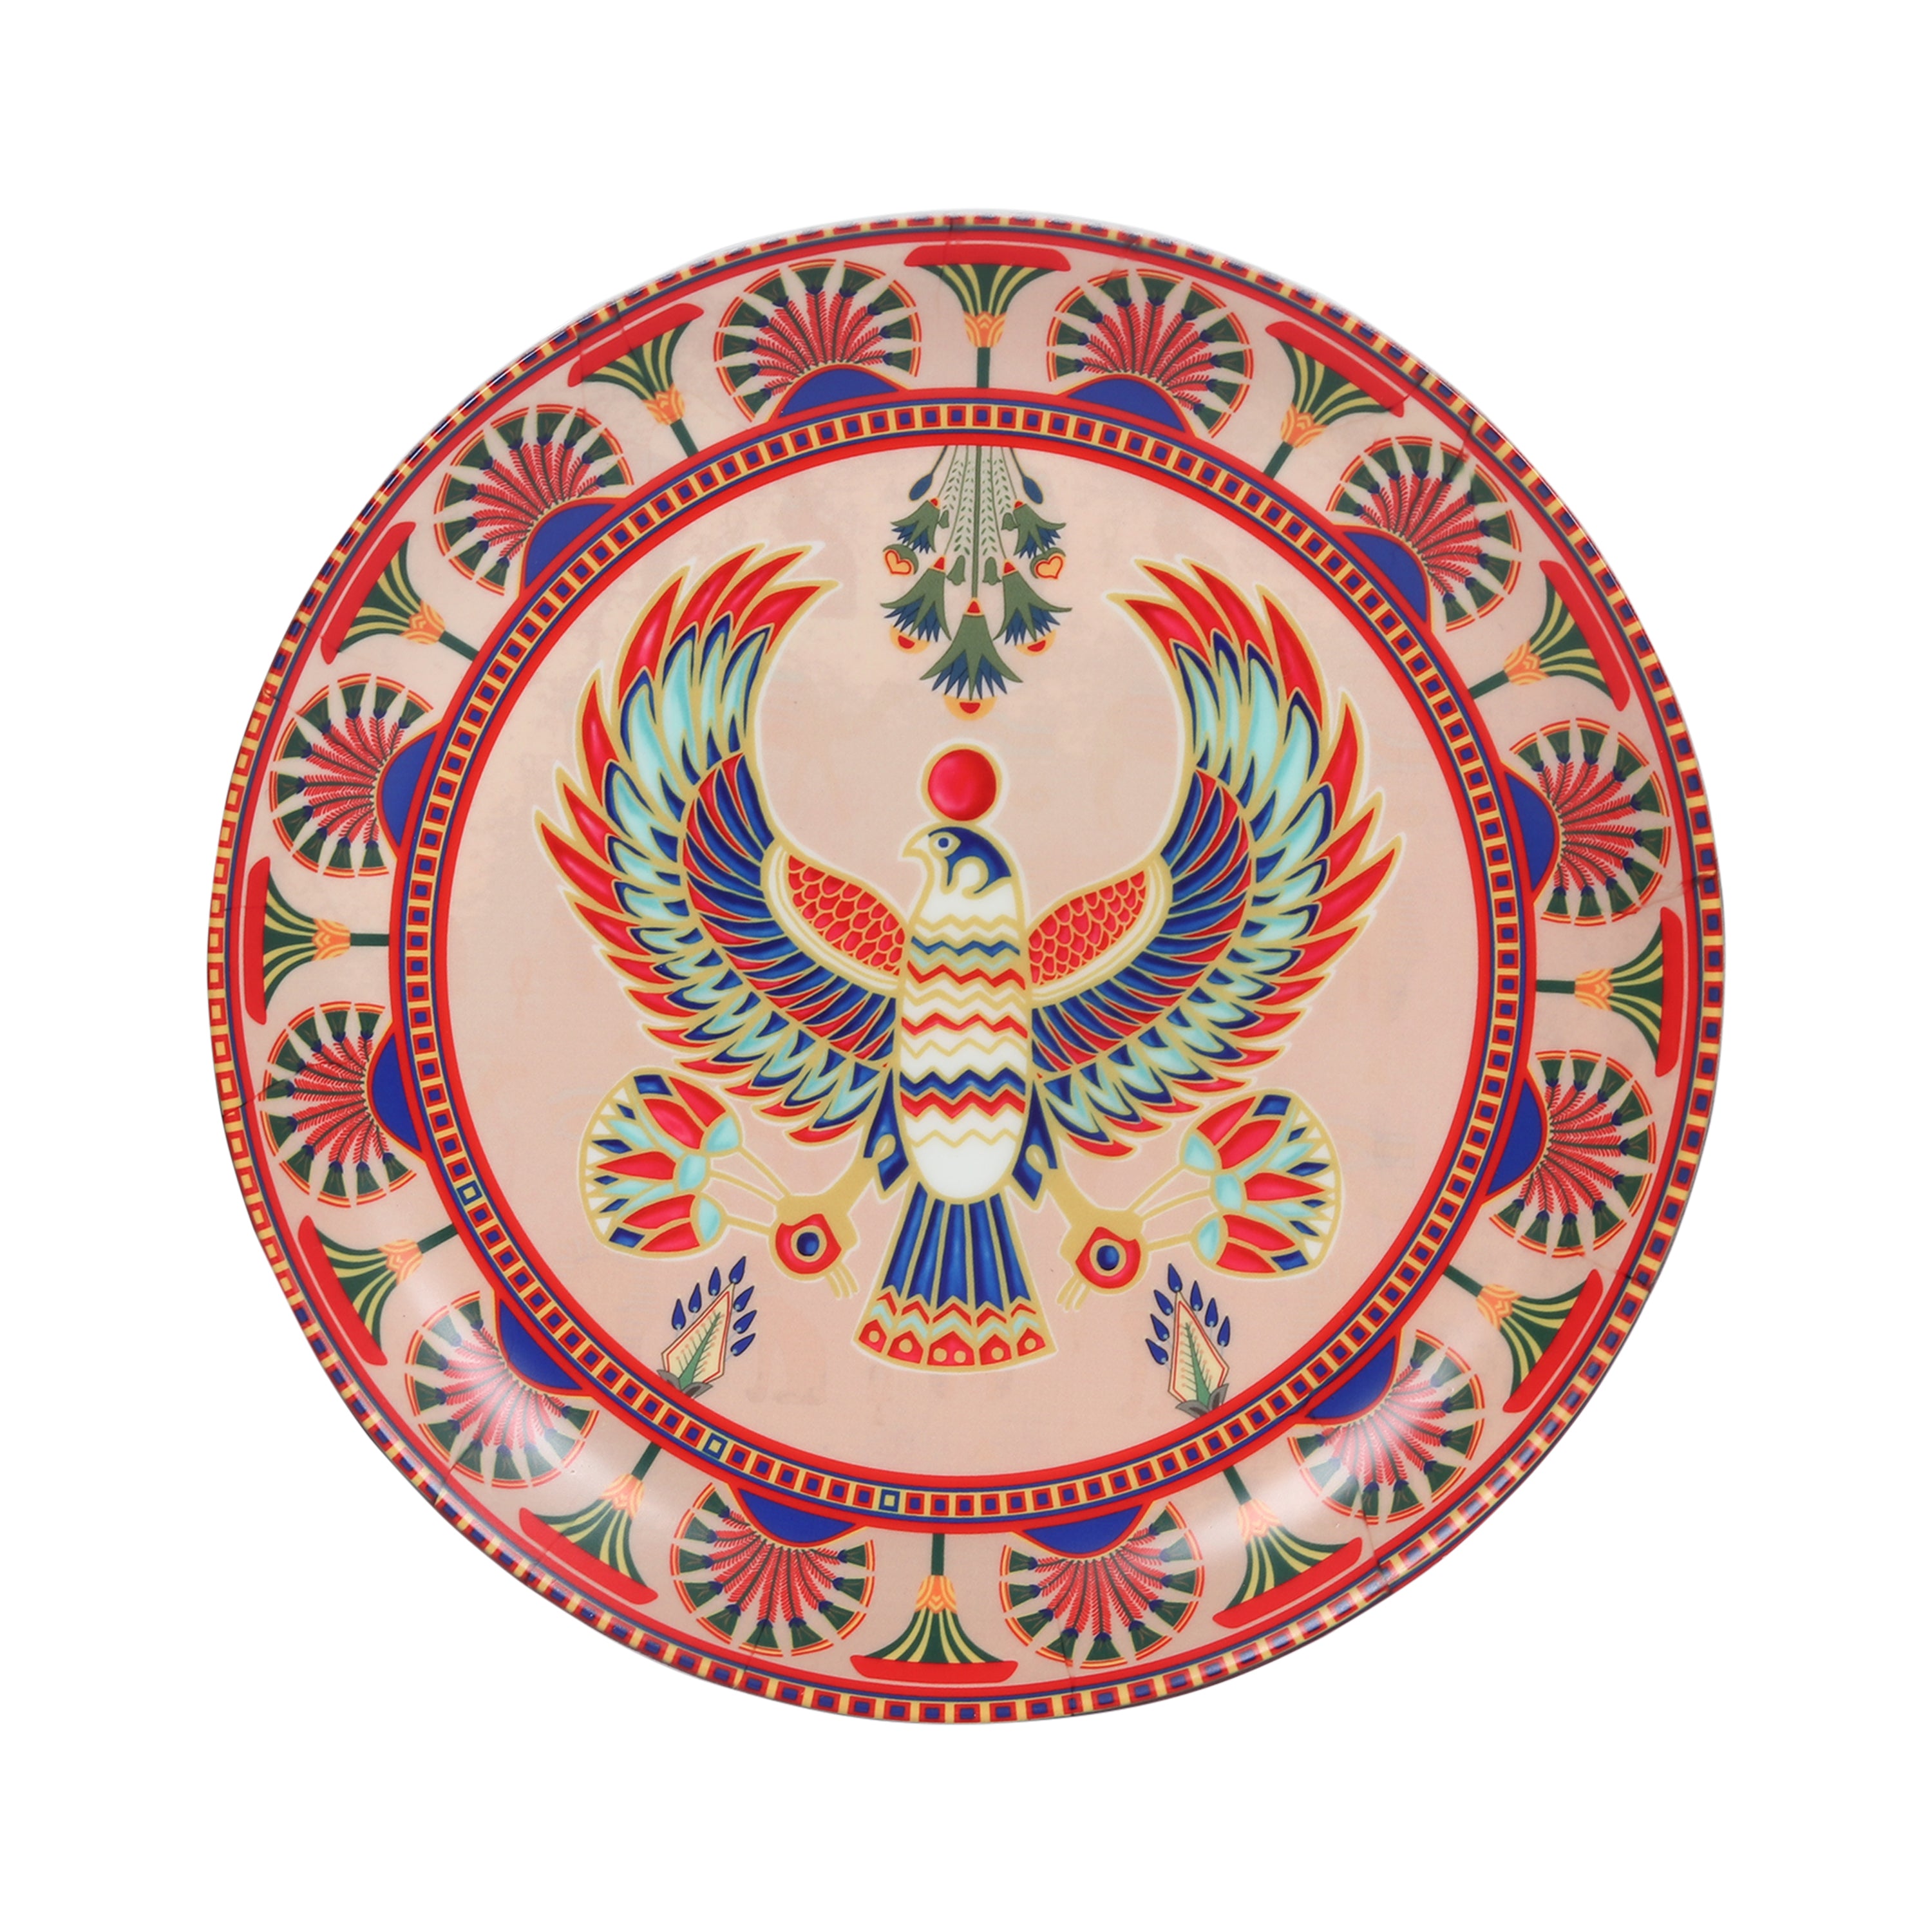 Decorative Wall Plate - The Egyptian Eagle